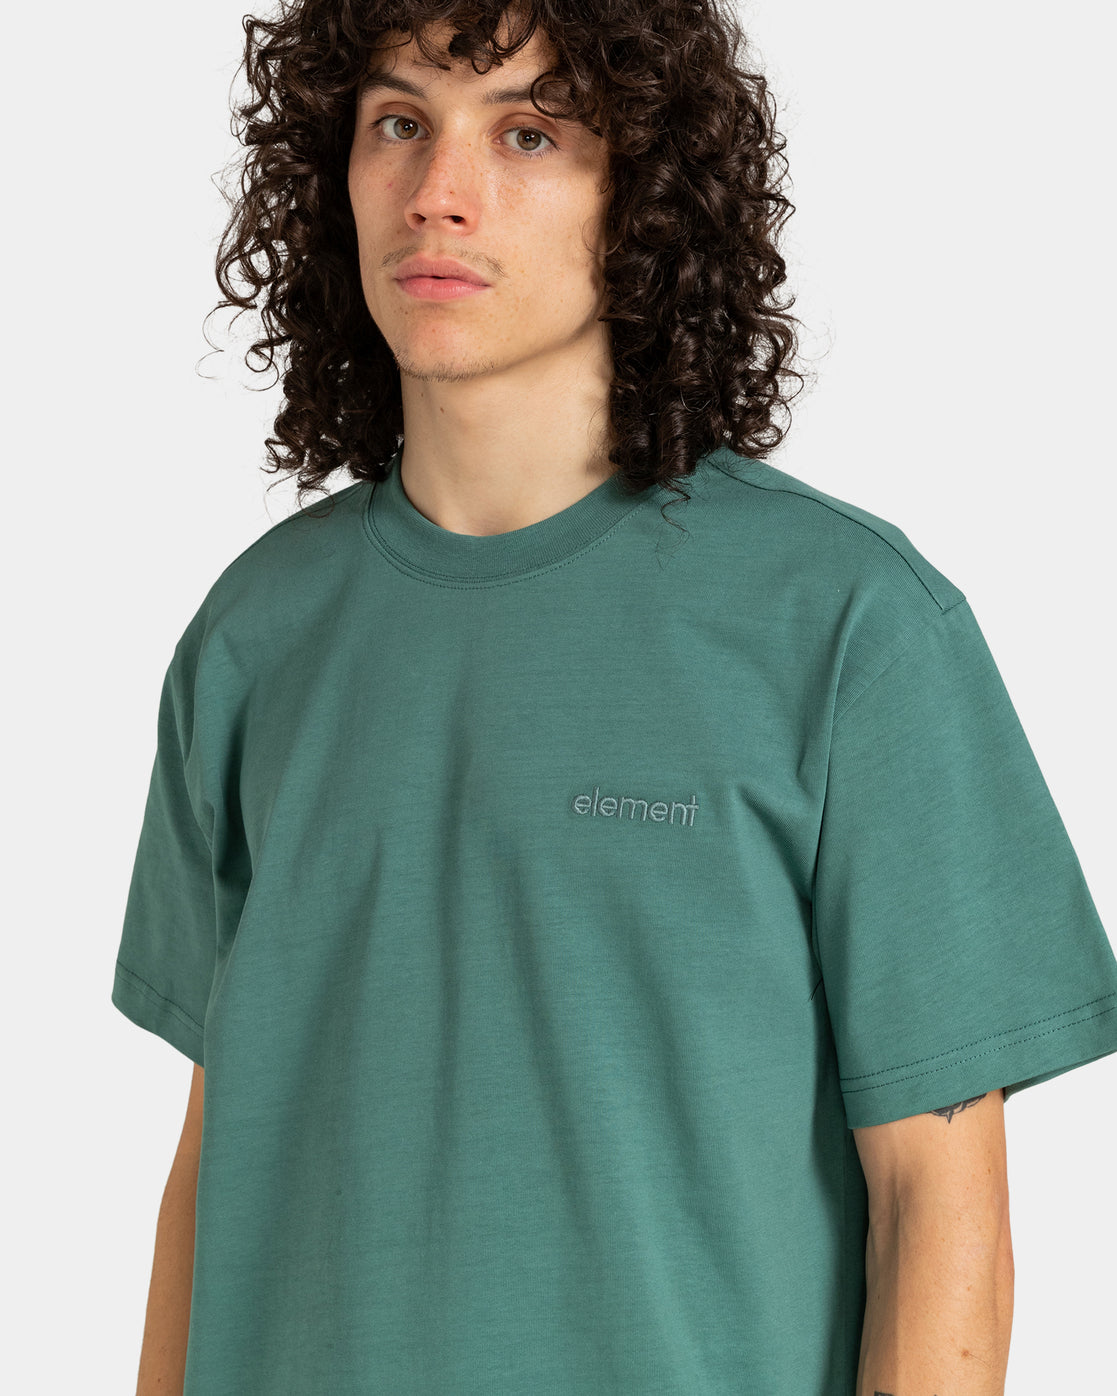 Camiseta Element Skateboards Crail 3.0 North Atlantic | Camisetas de hombre | Camisetas manga corta de hombre | Element | surfdevils.com